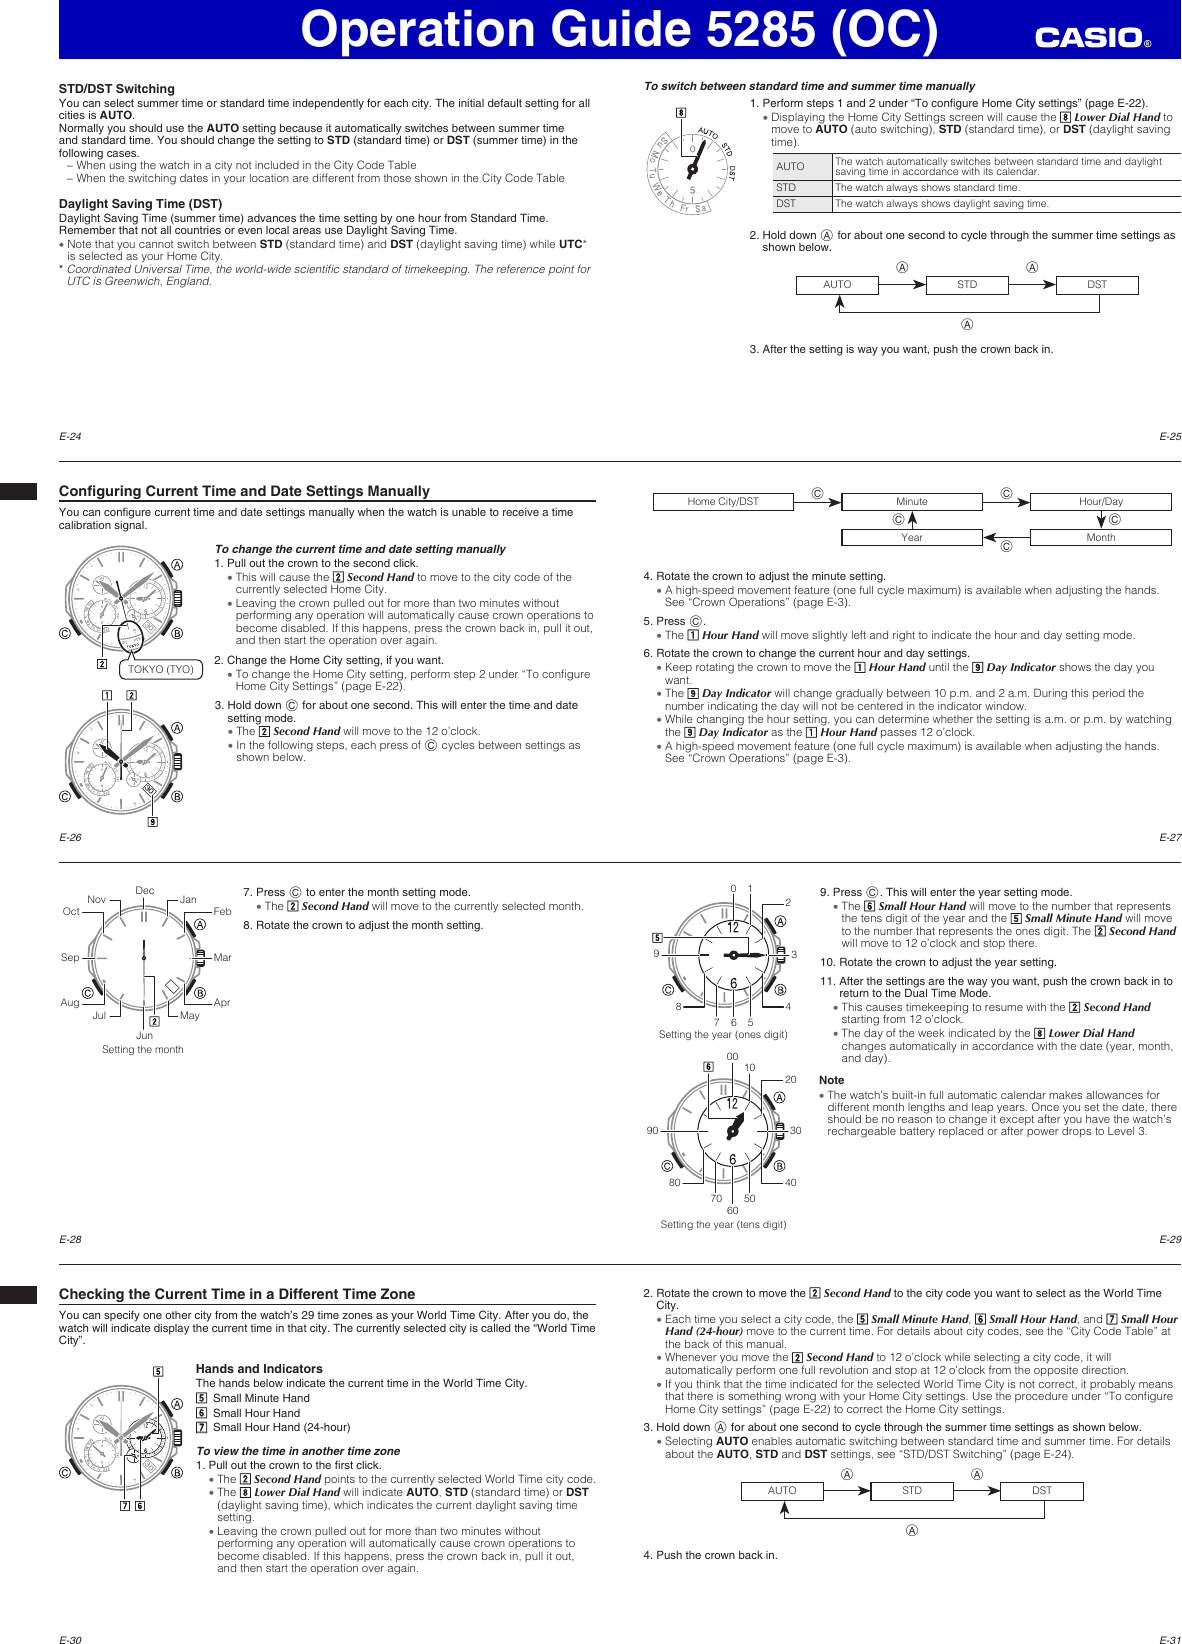 Page 4 of 6 - Casio Casio-Casio-5285-Users-Manual- QW-5285OC  Casio-casio-5285-users-manual